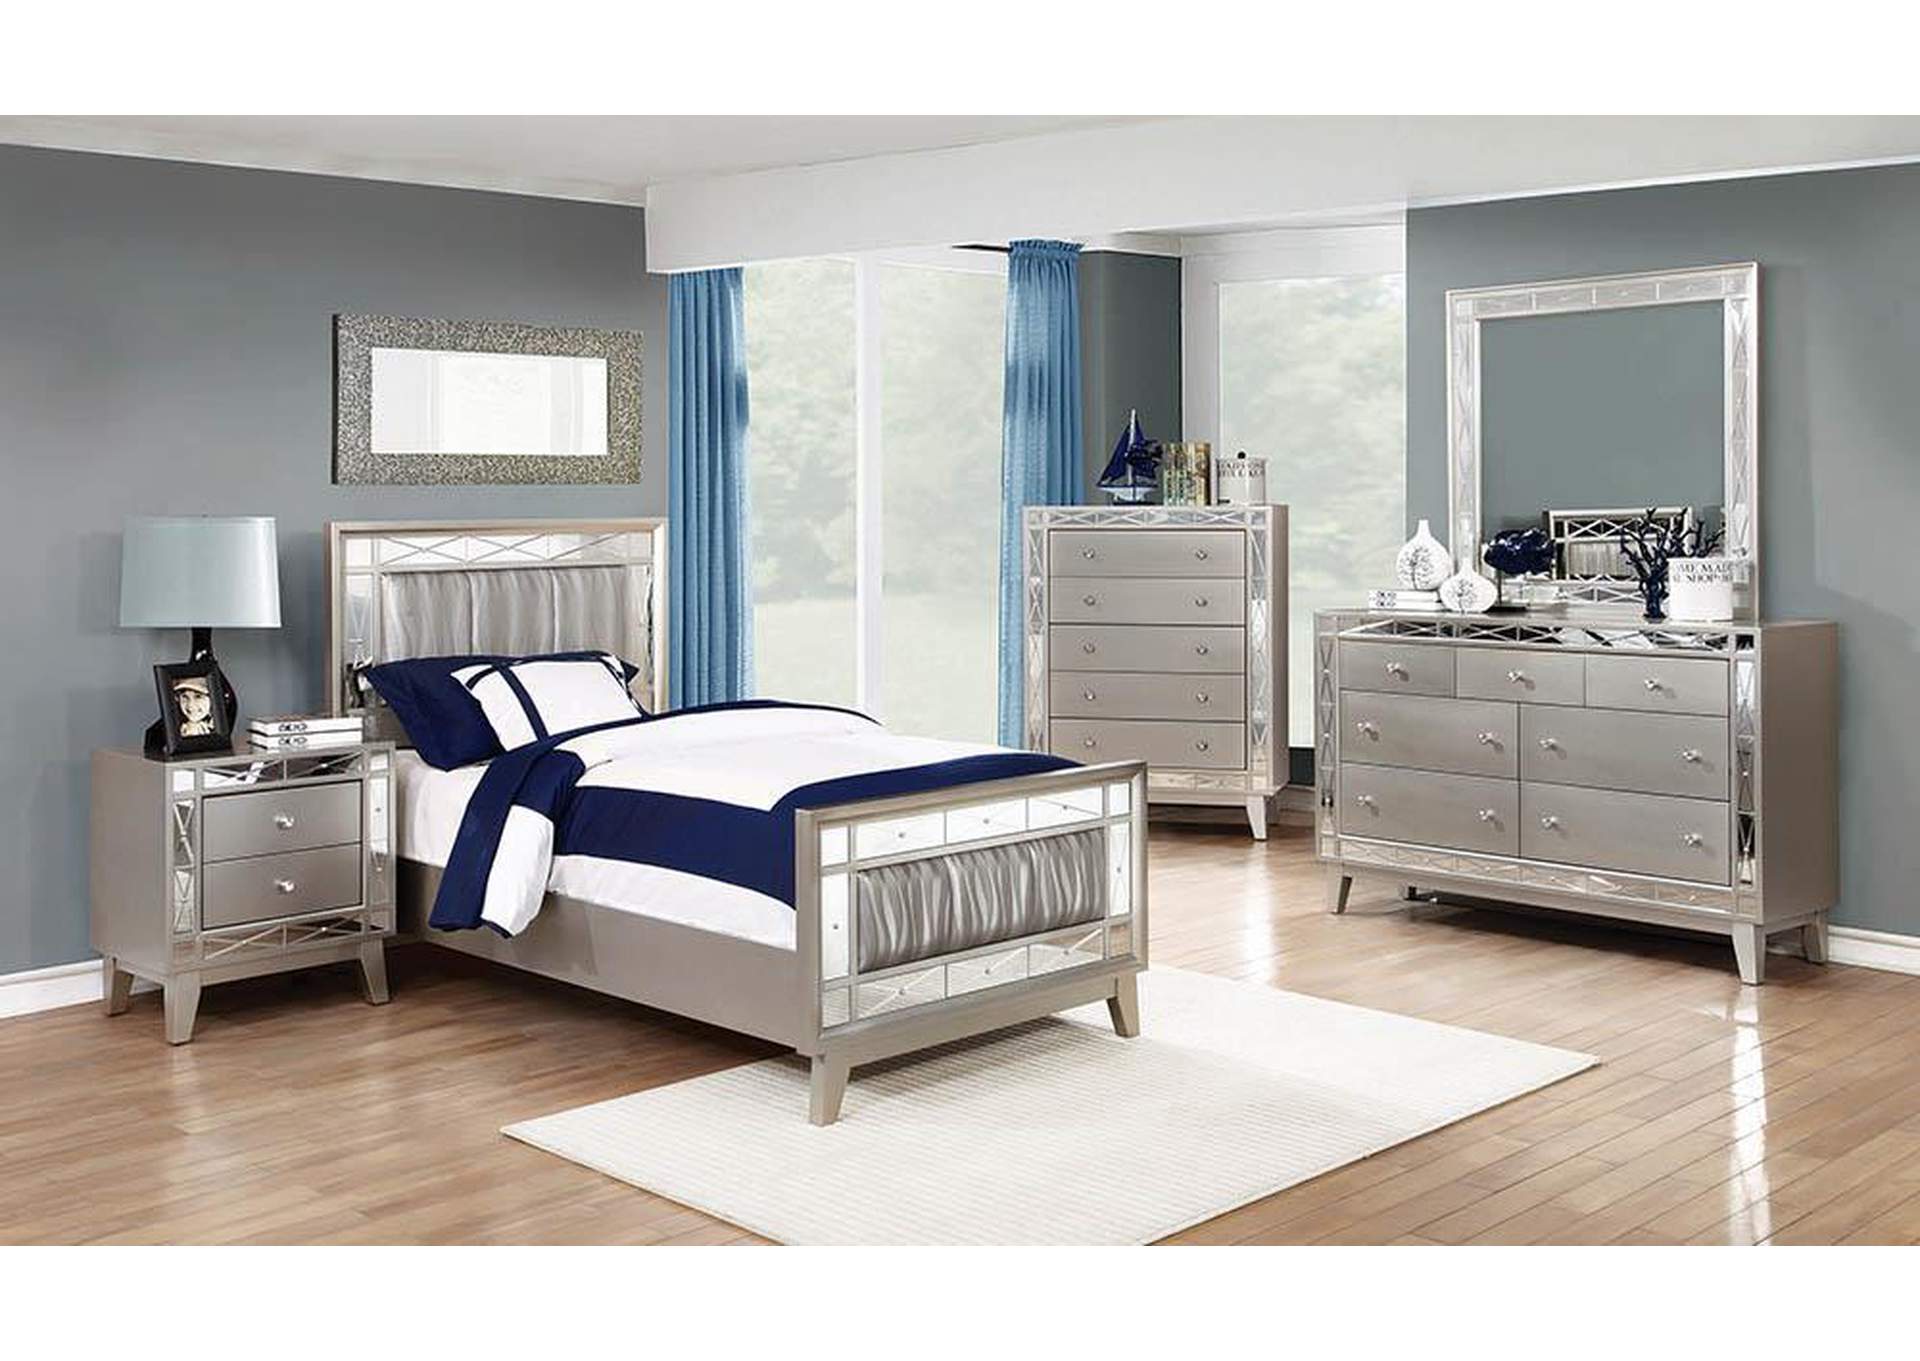 Leighton Contemporary Metallic Twin Bed,Coaster Furniture